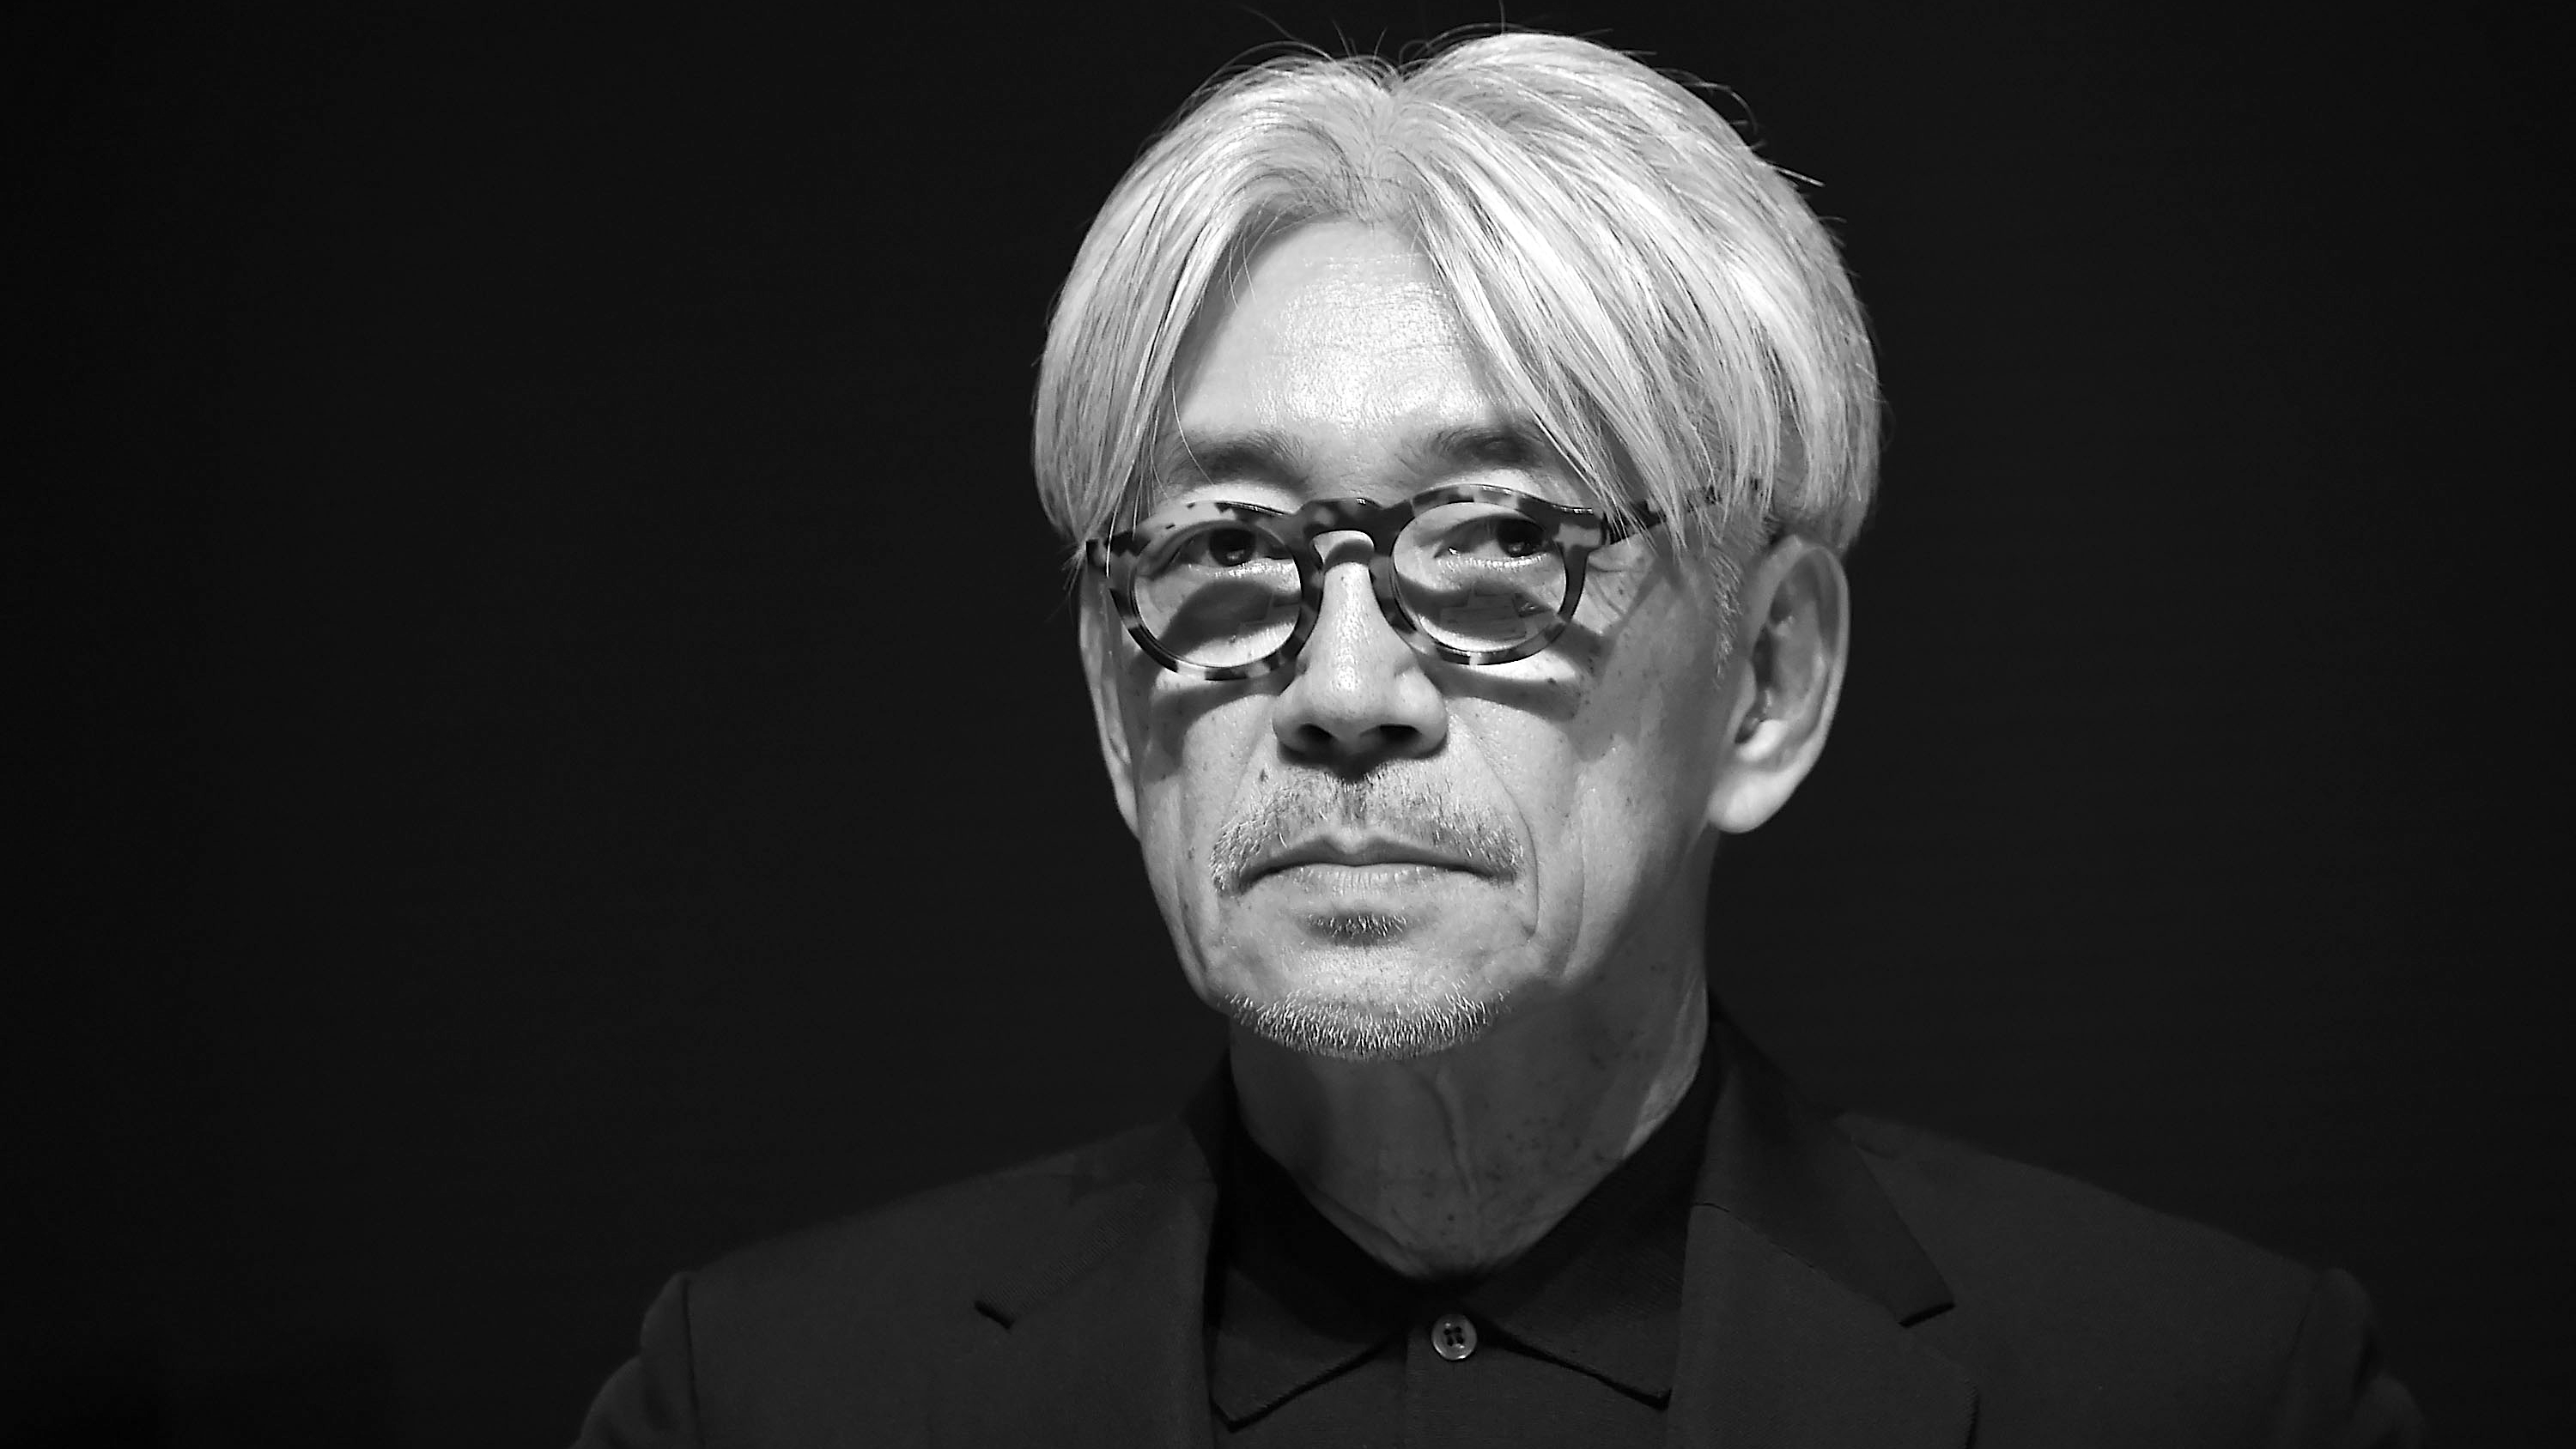 Documentary Shows Last Performance of Late Composer Ryuichi Sakamoto